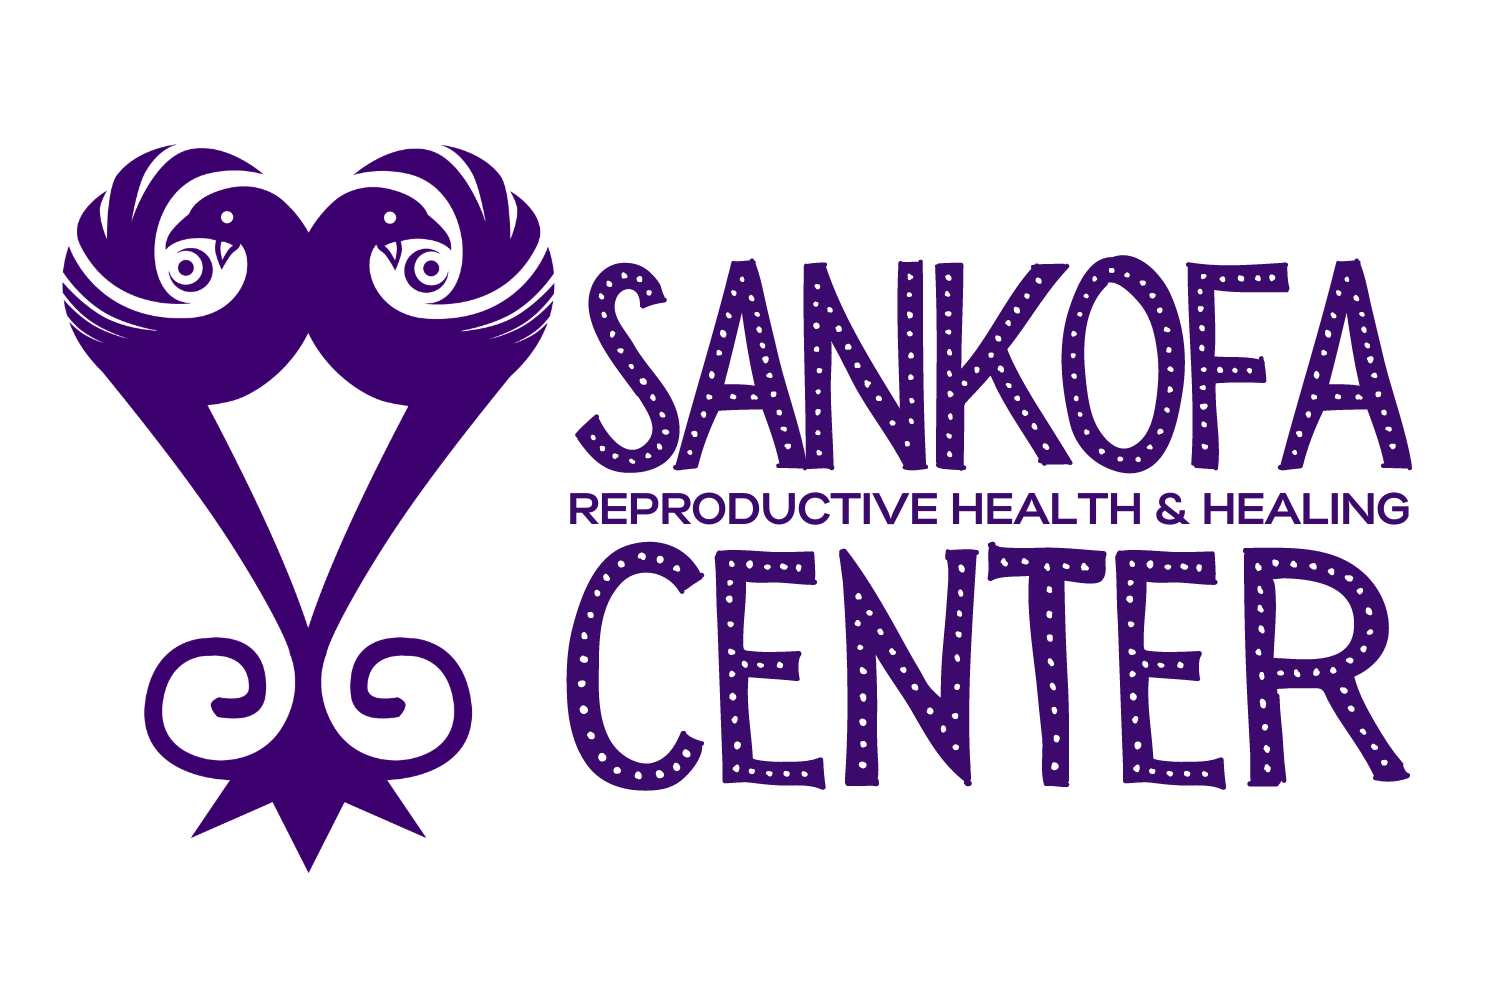 Sankofa Reproductive Health and Healing Center